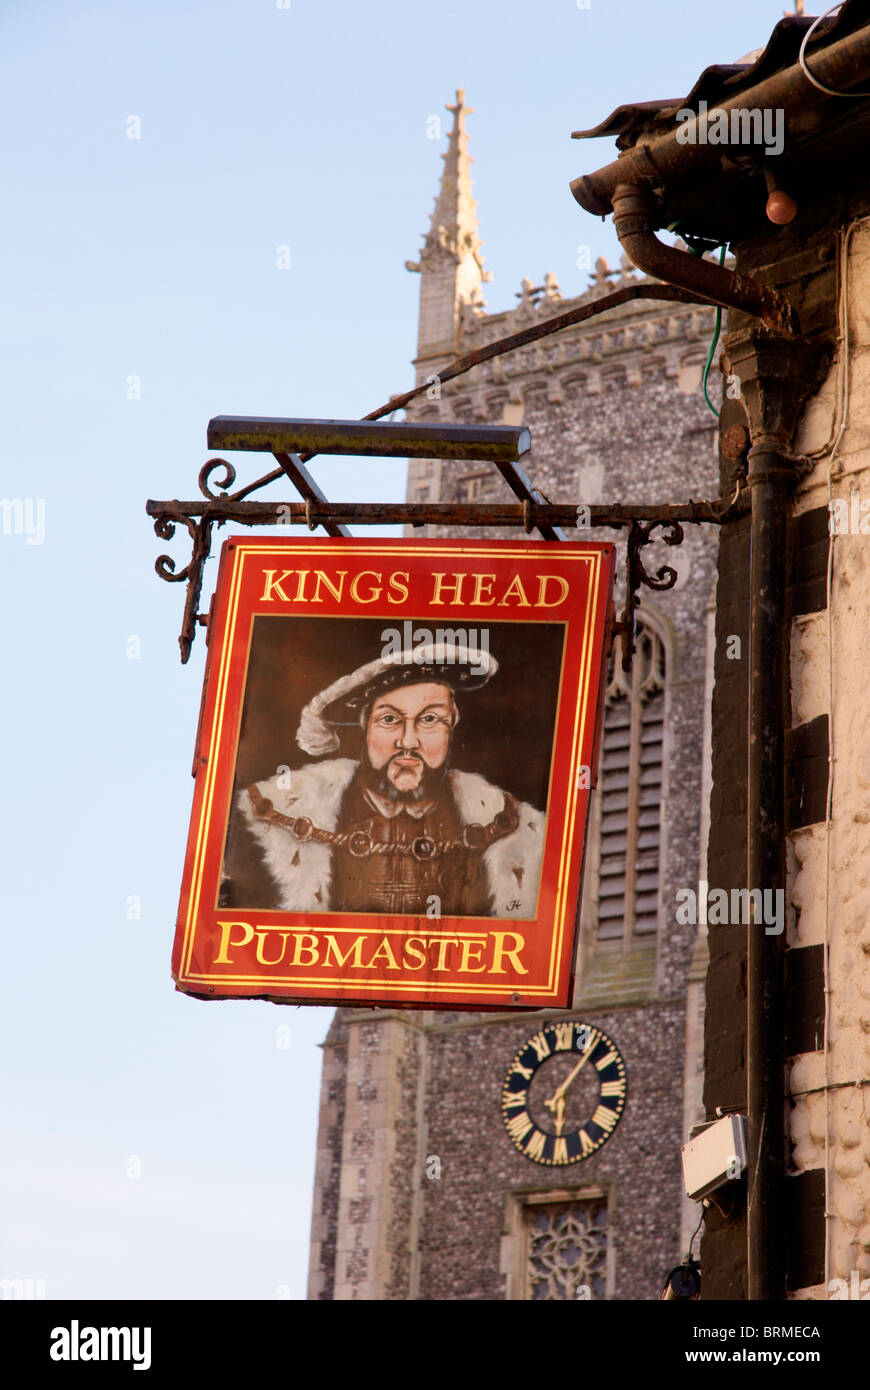 King's head pub sign Stock Photo